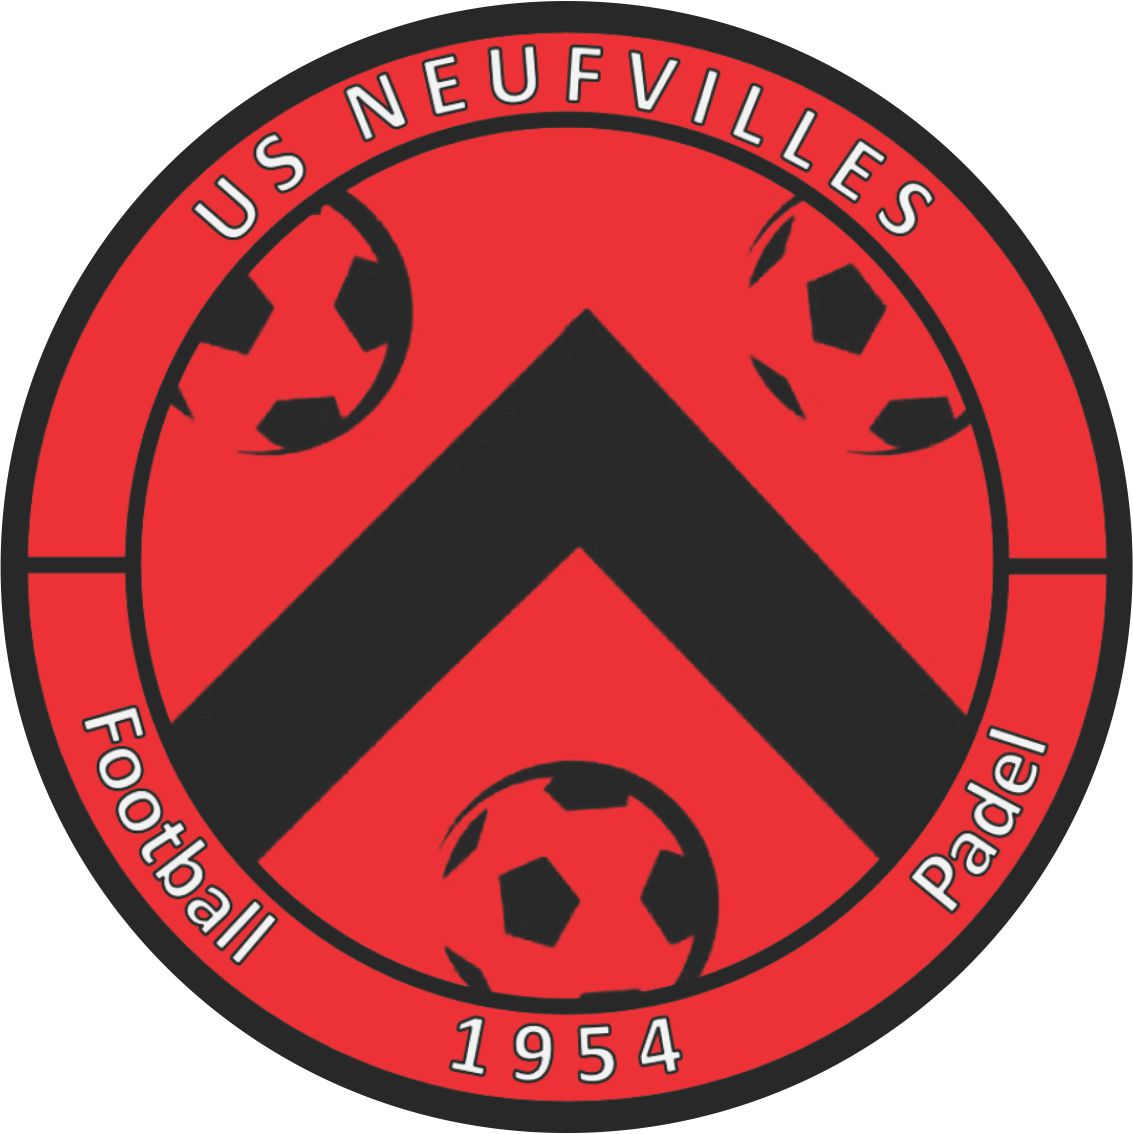 us neufvilles Logo